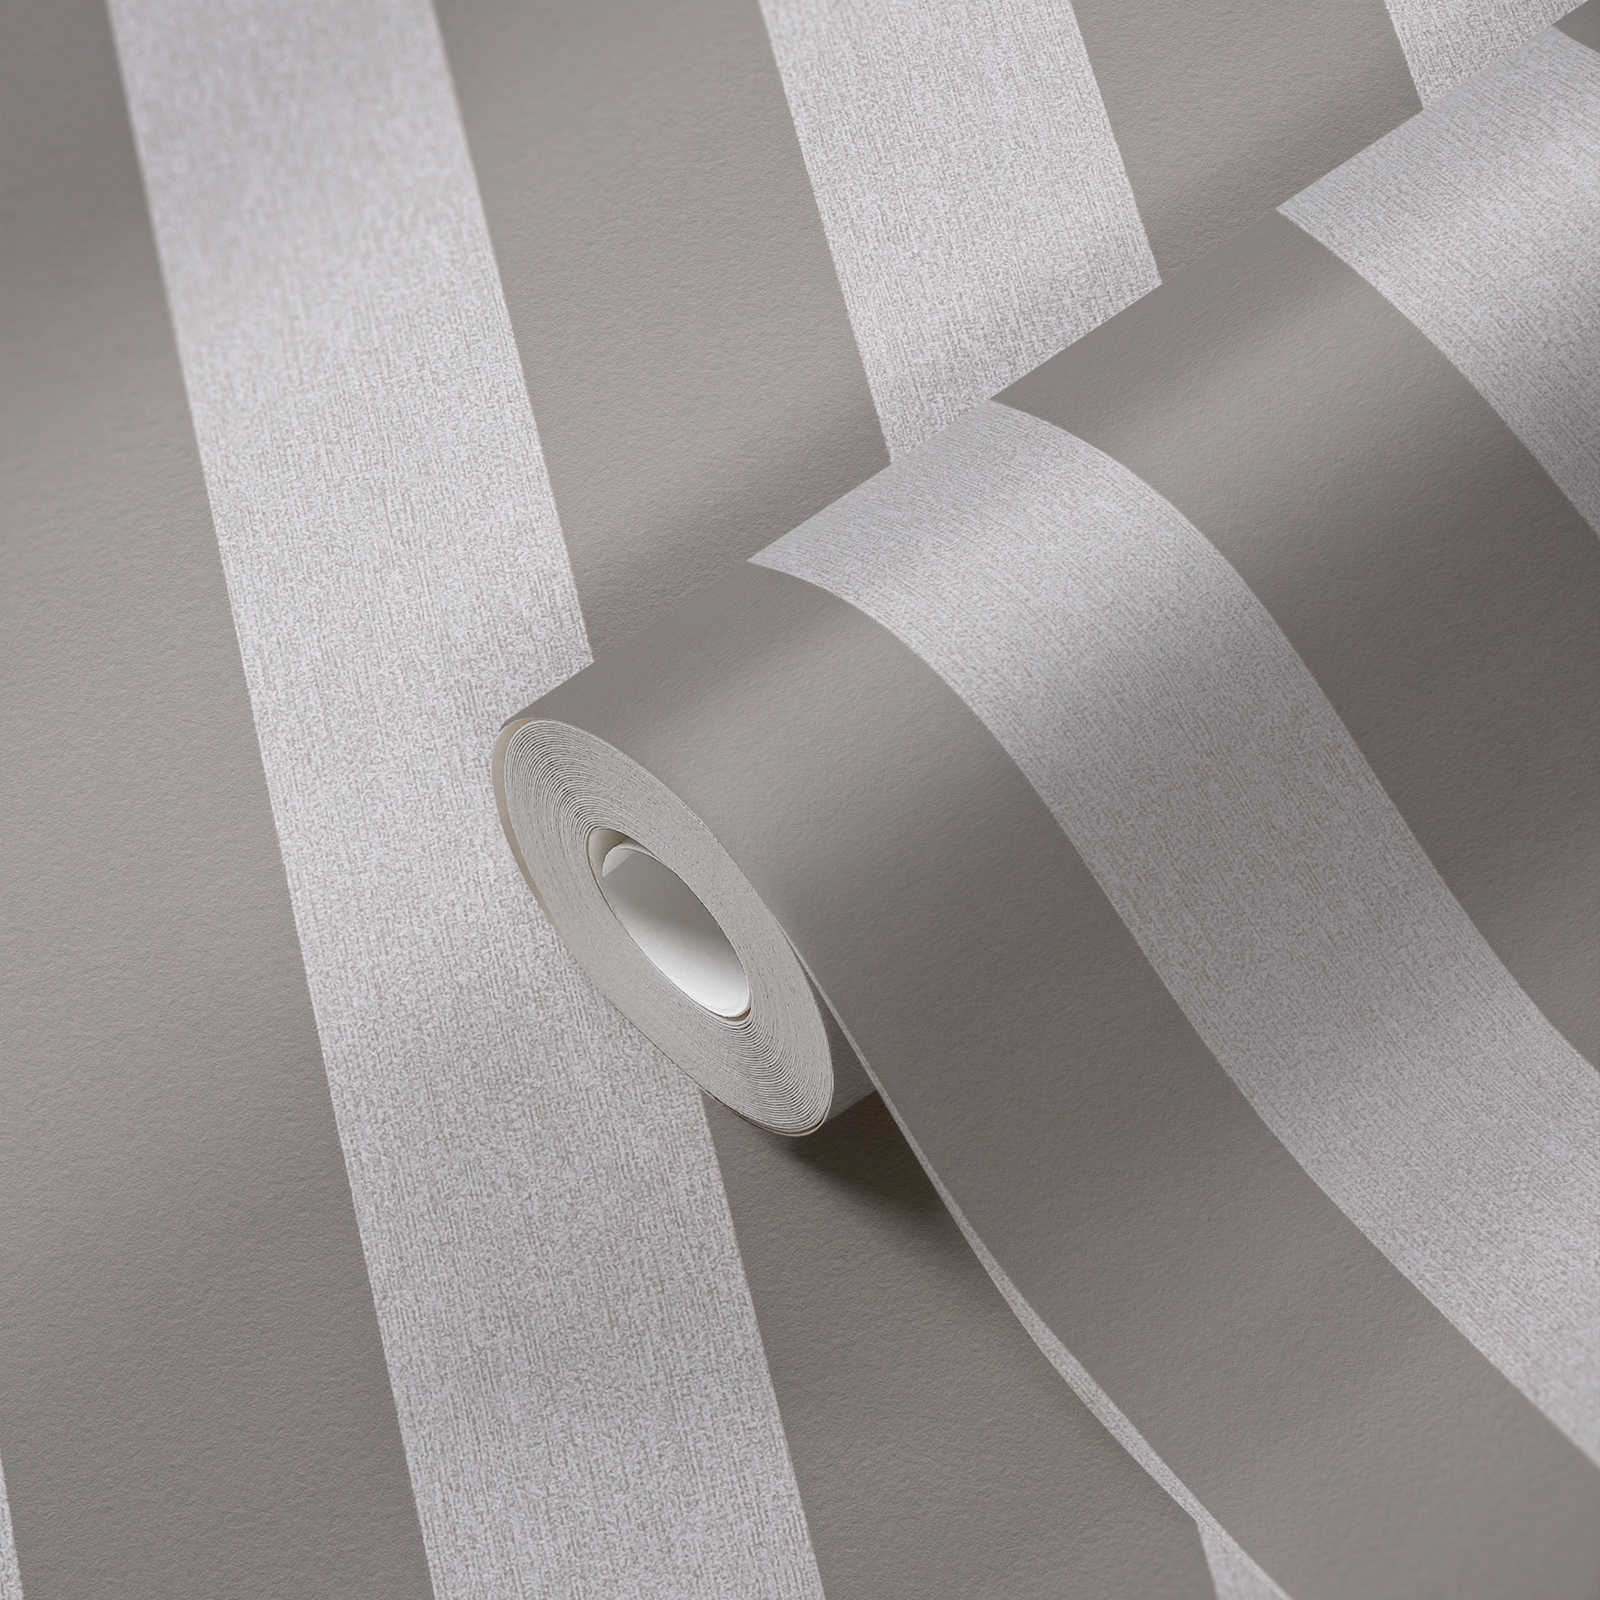             Wallpaper with textured optics & stripes pattern - grey, light grey
        